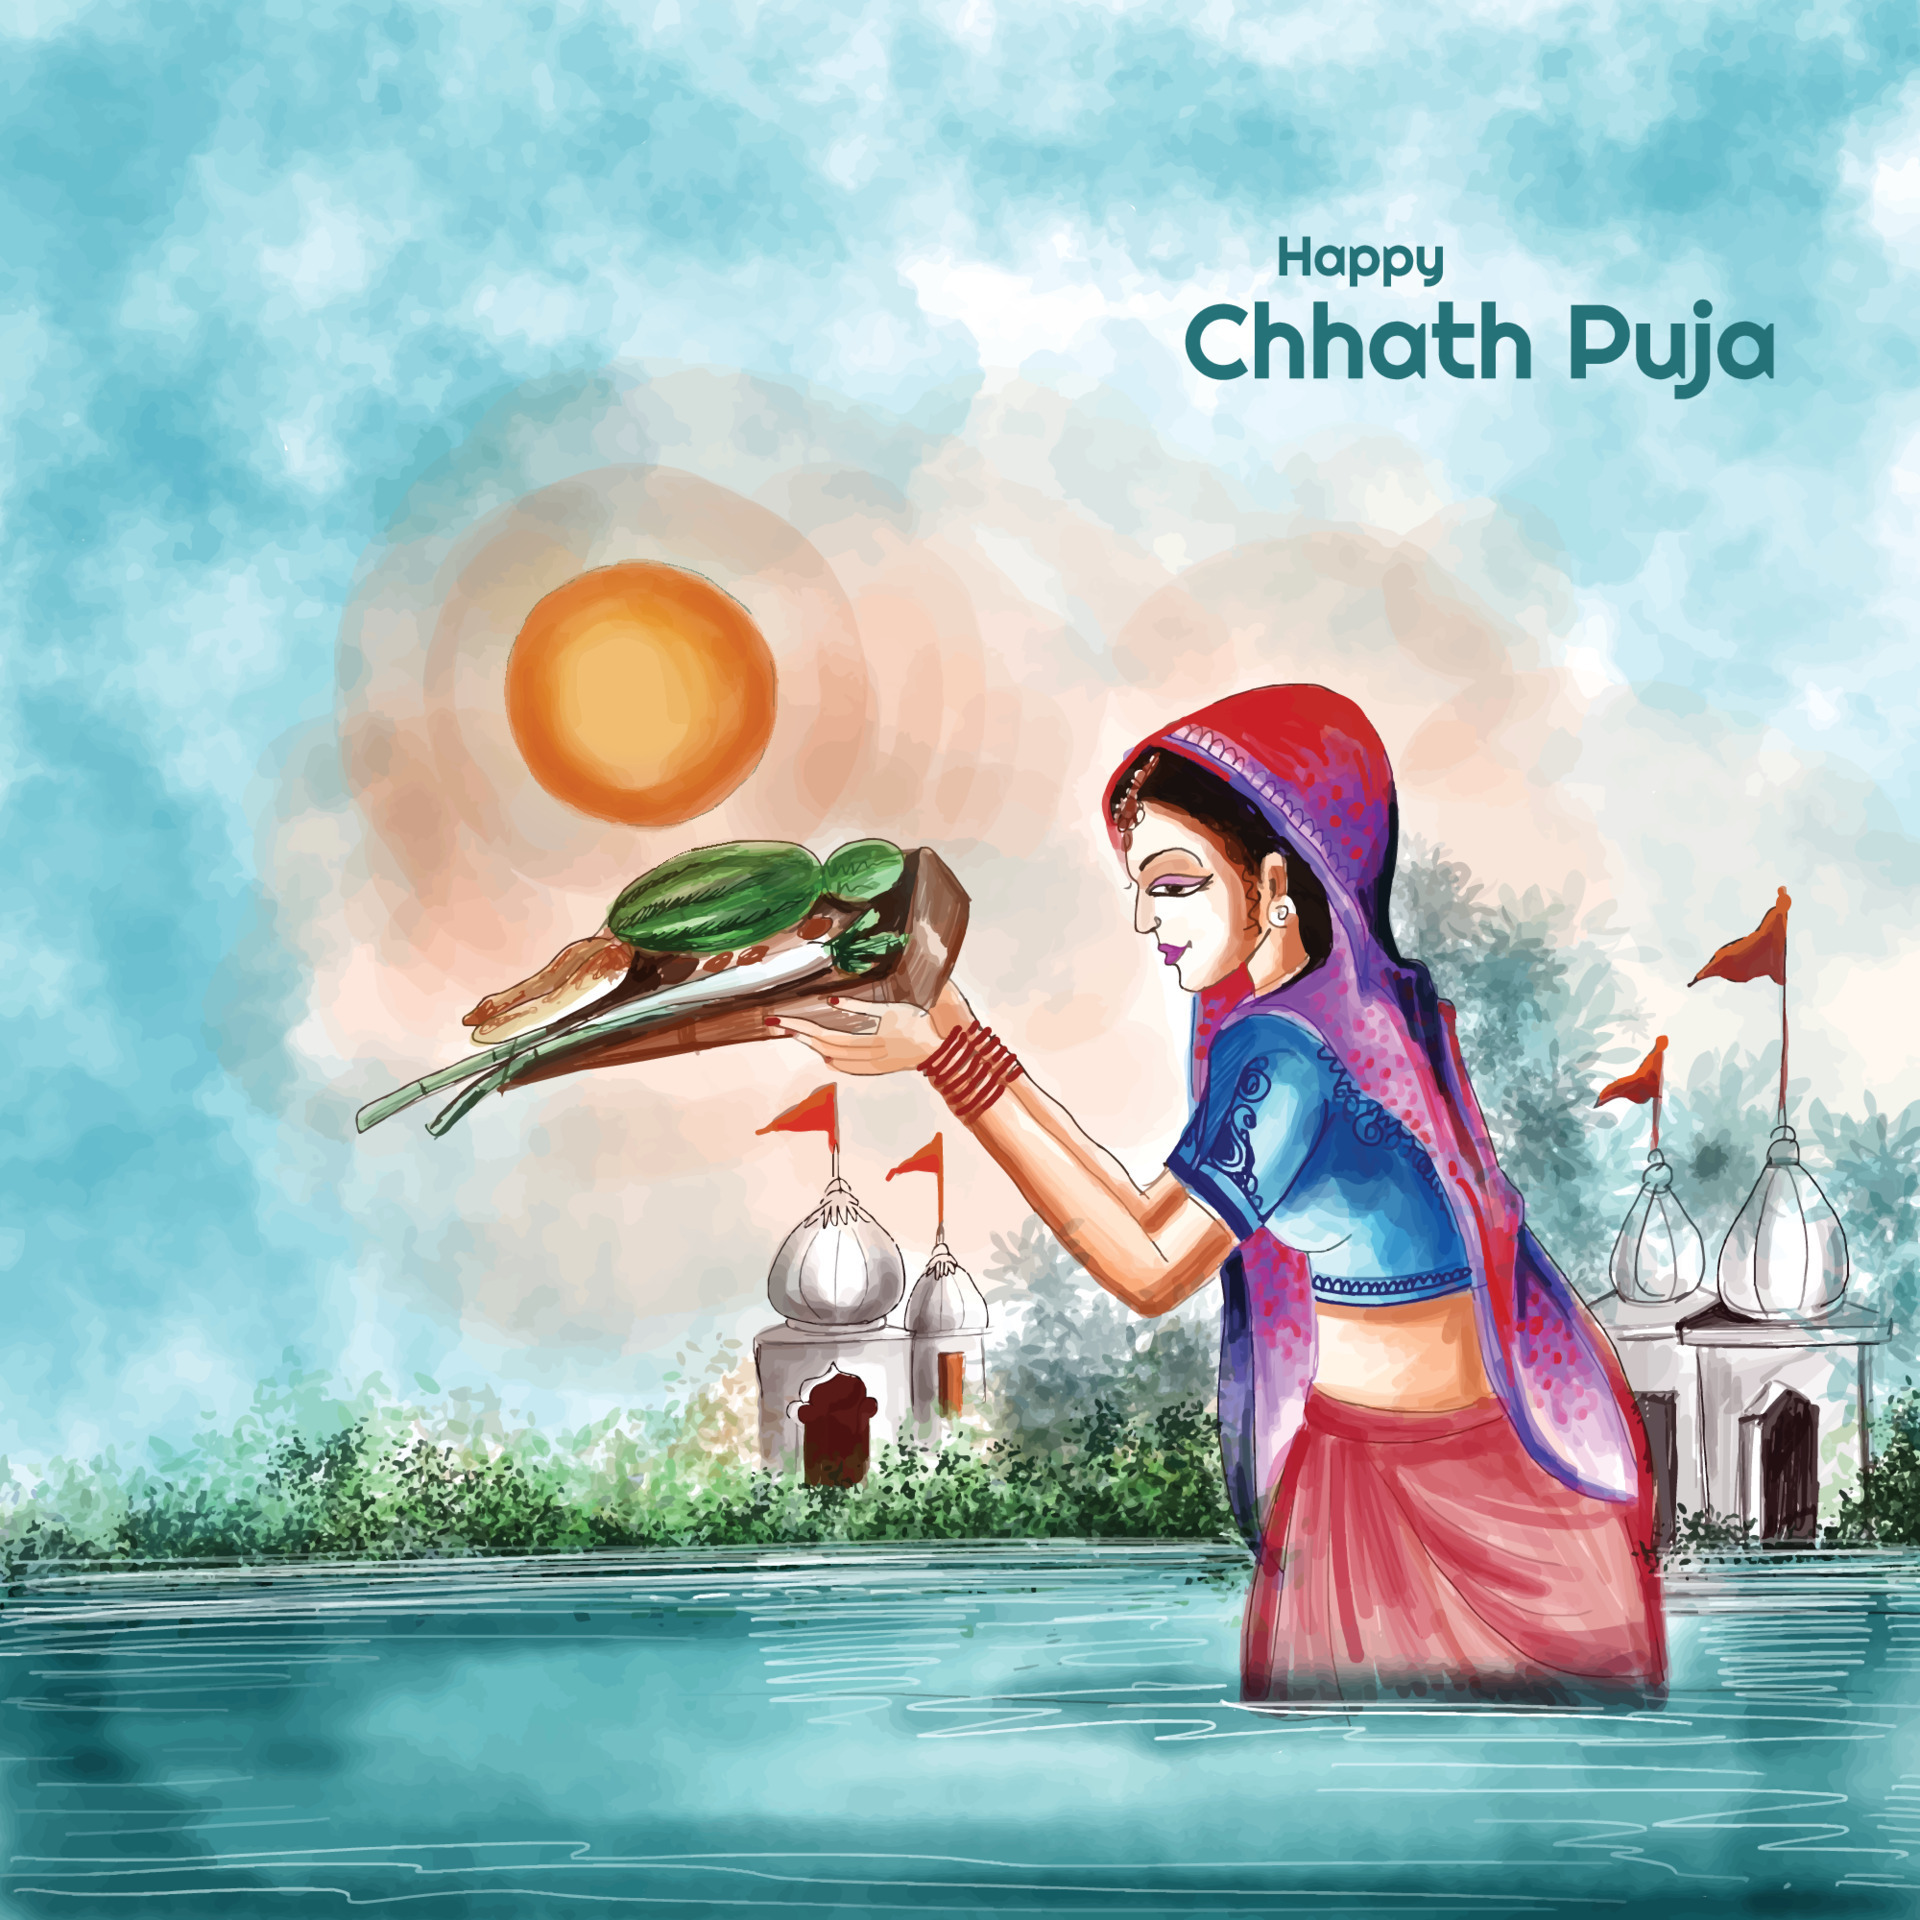 Happy Chhath Puja Photo Editing Background With Girl Picsart Photoshop  Chhath  puja photo Editing background Photo editing